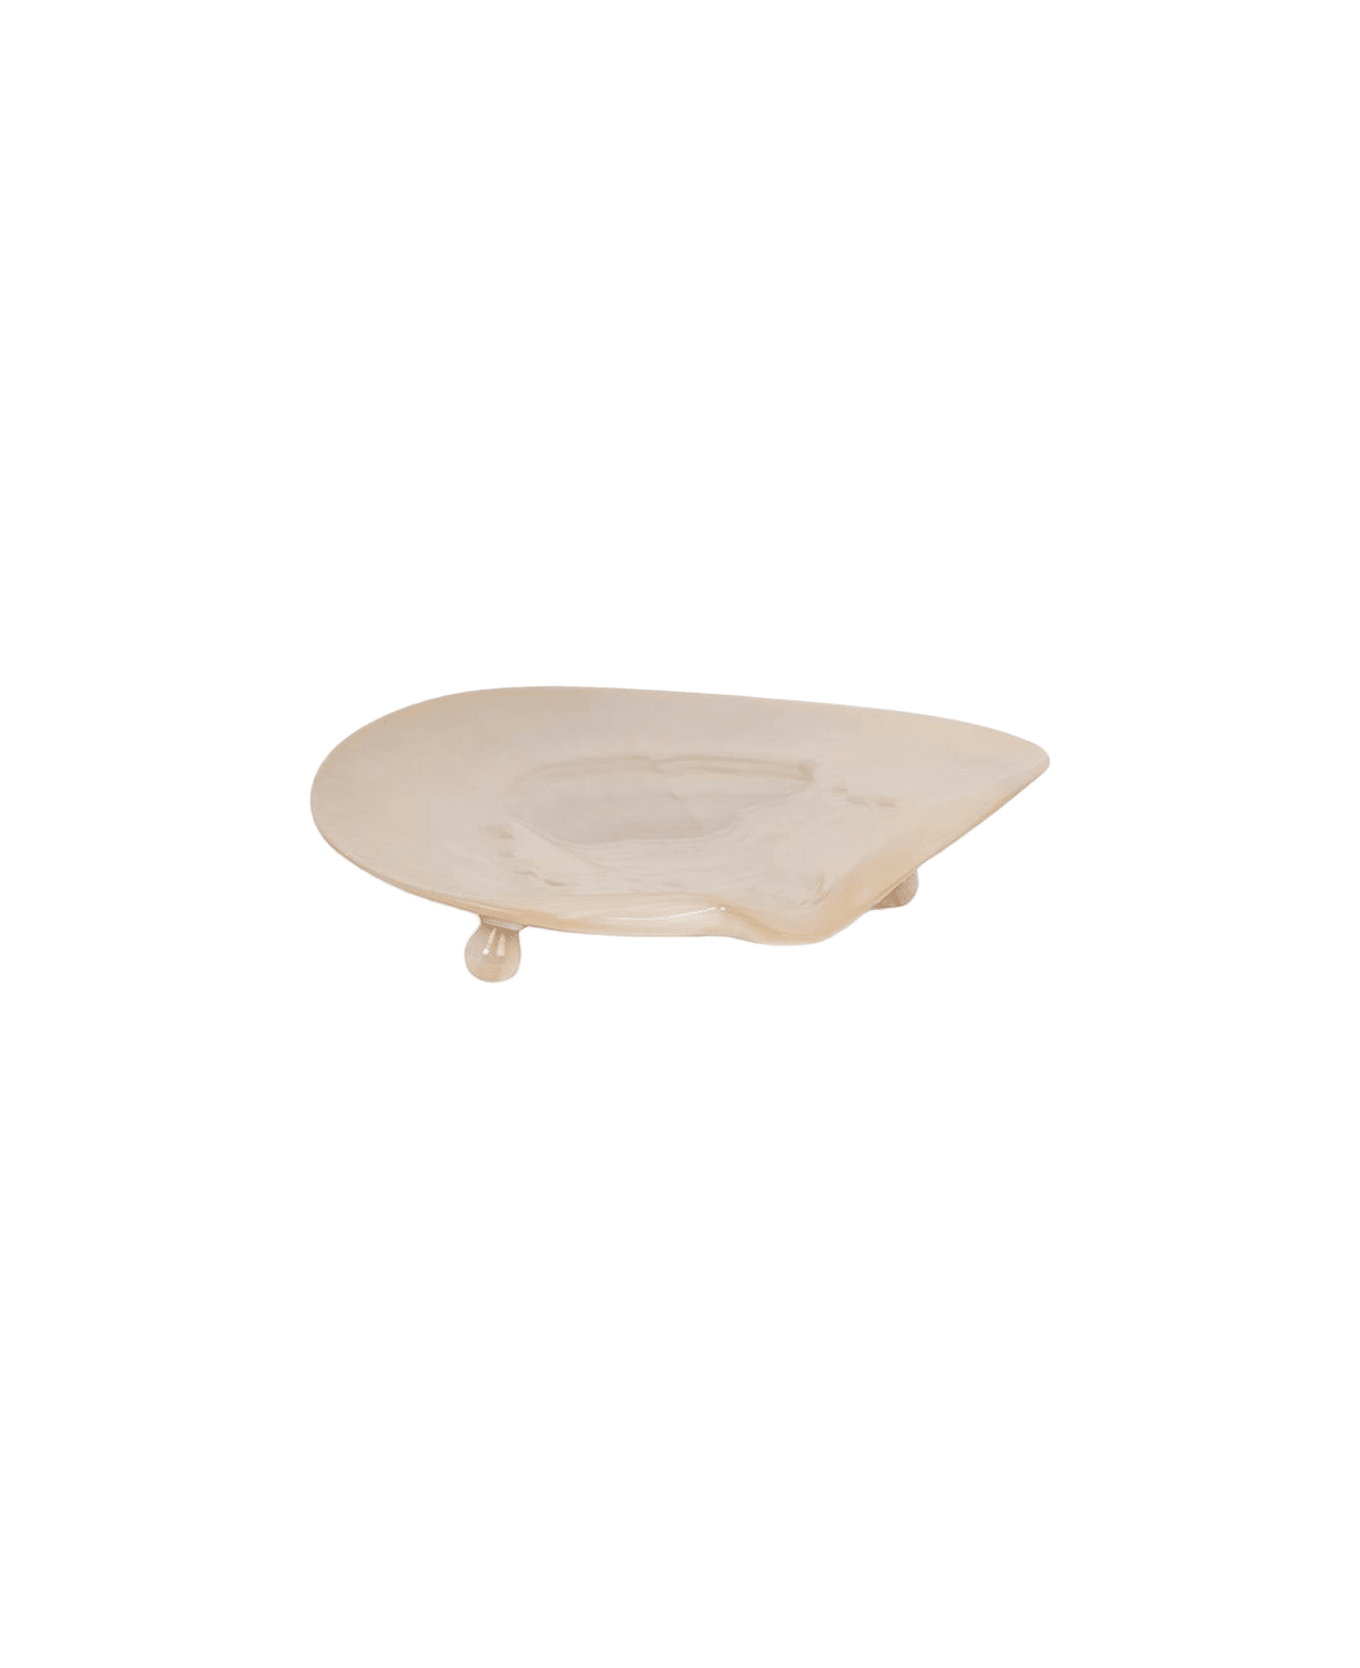 Larusmiani Small Caviar Plate  - Neutral カトラリー